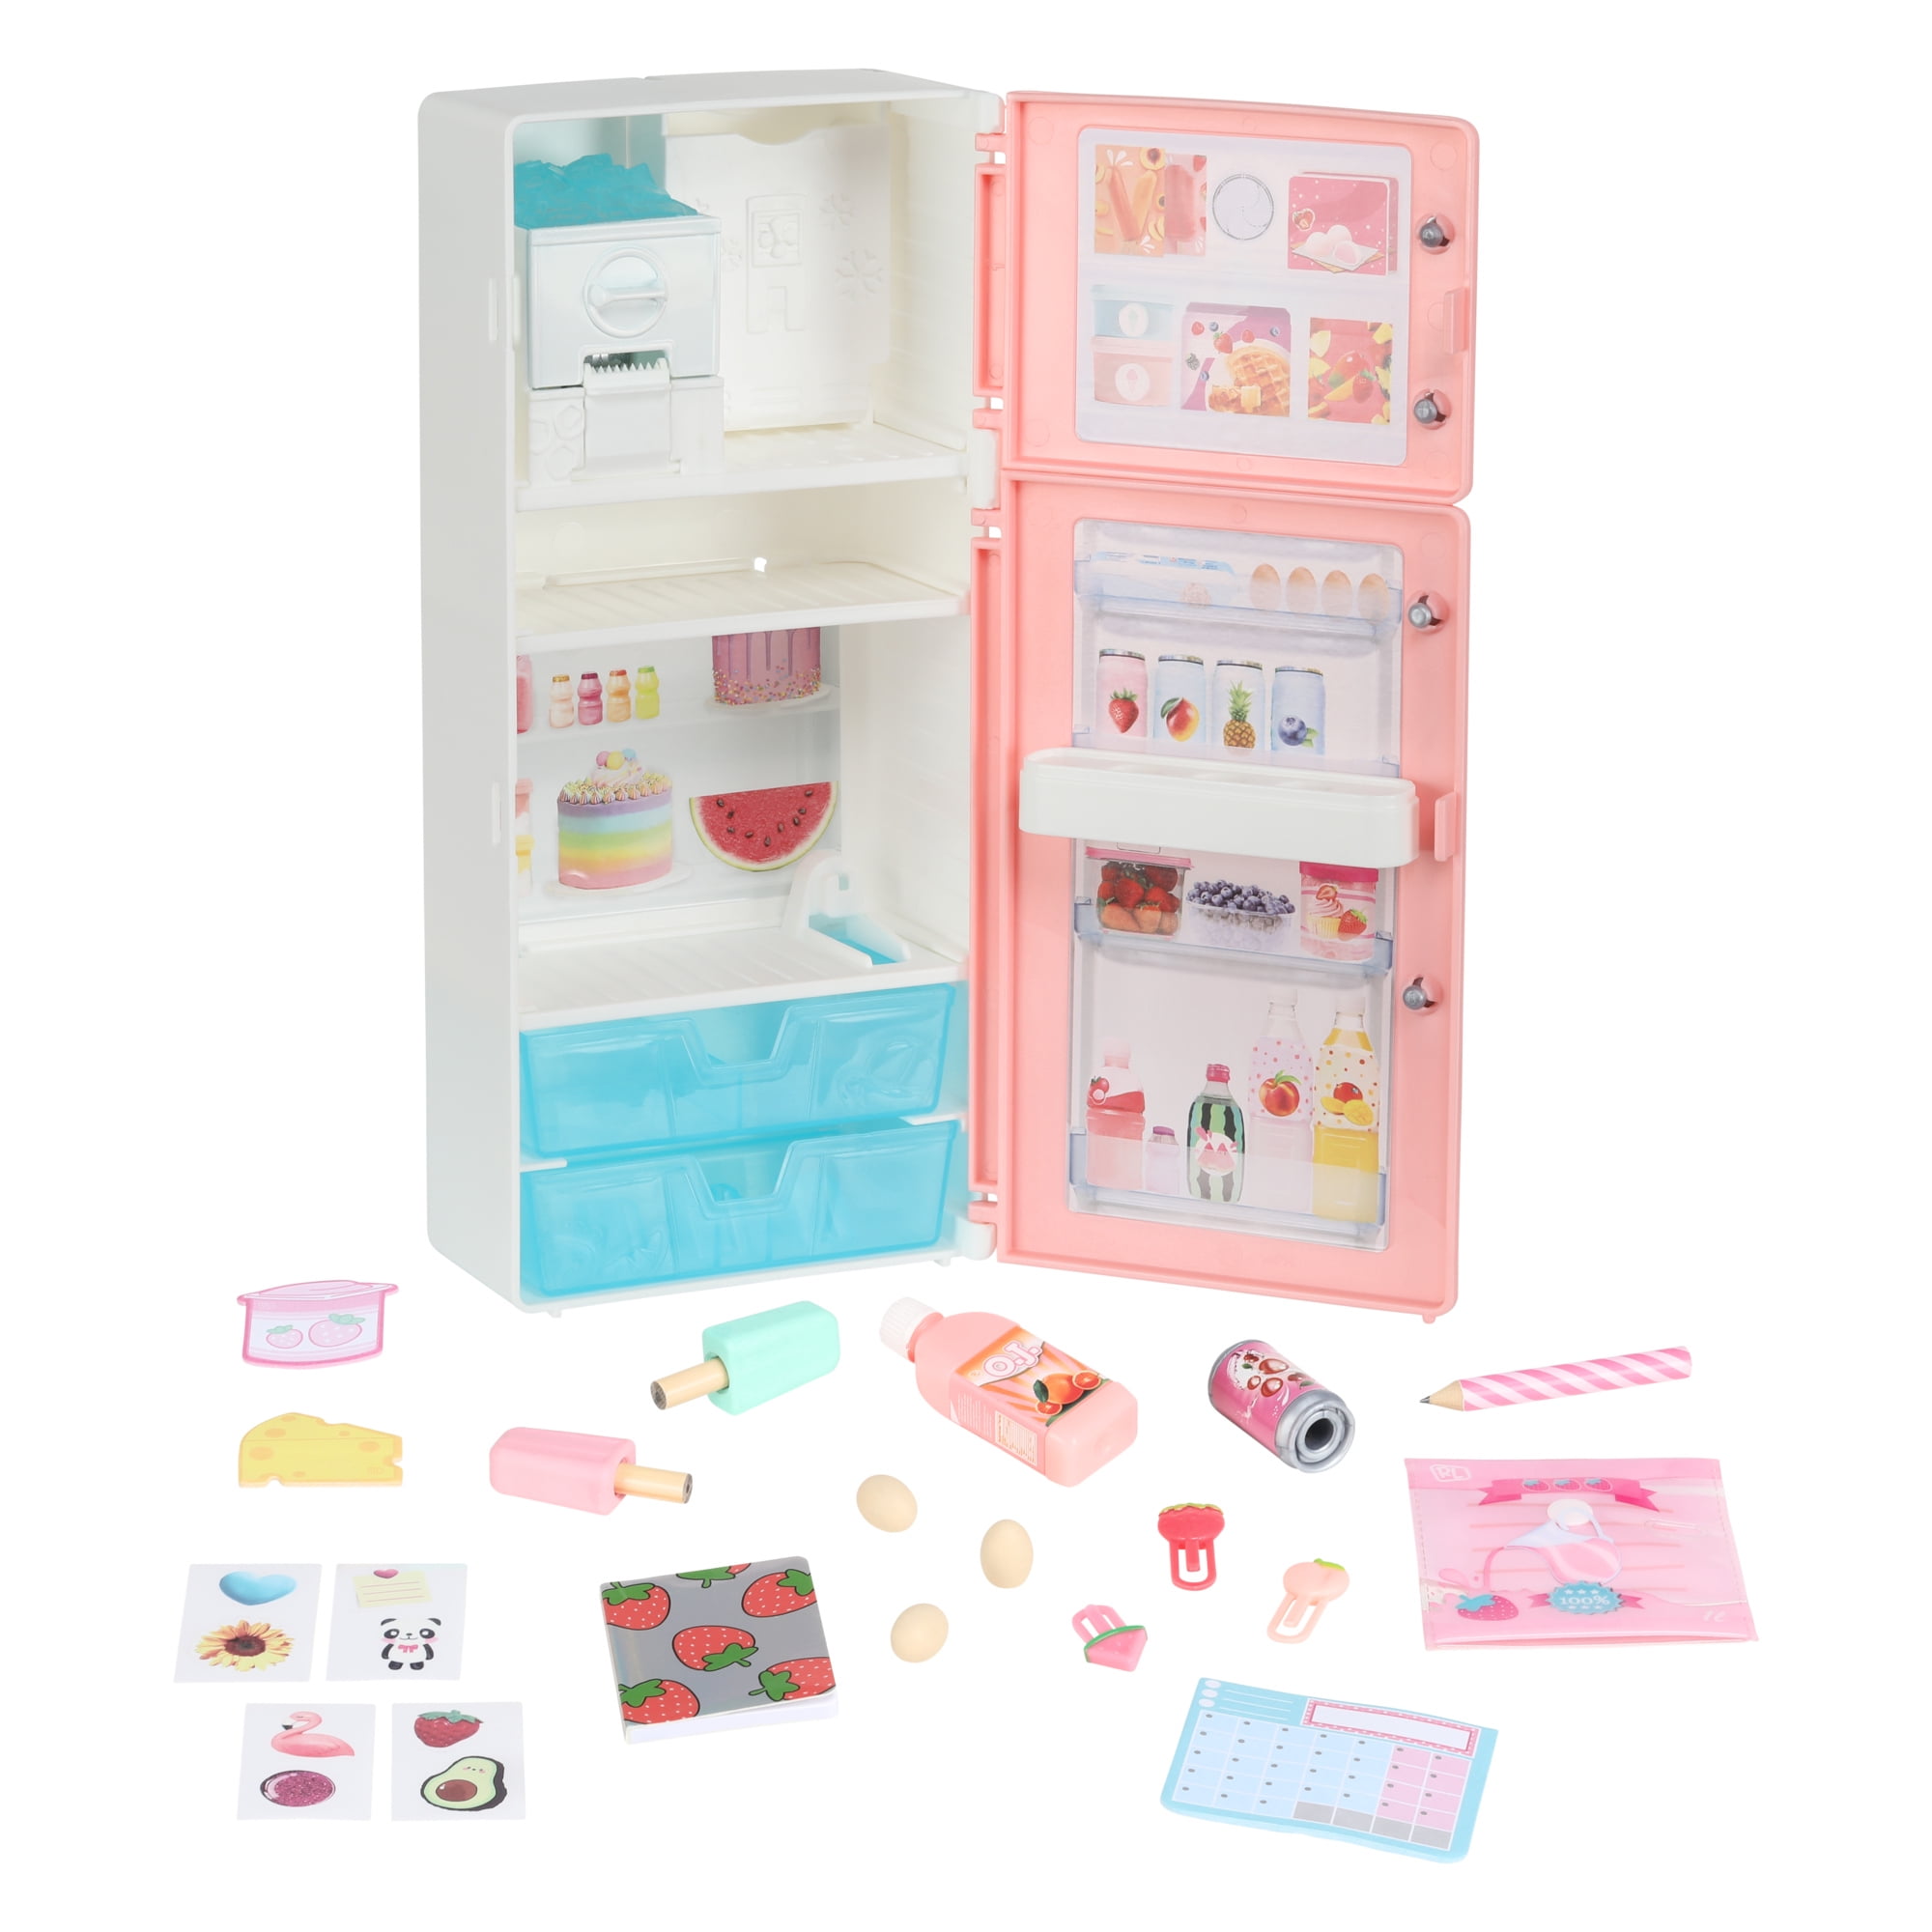 Real Littles fridge desktop caddies, plushie mini backpack and Disney micro  journals 